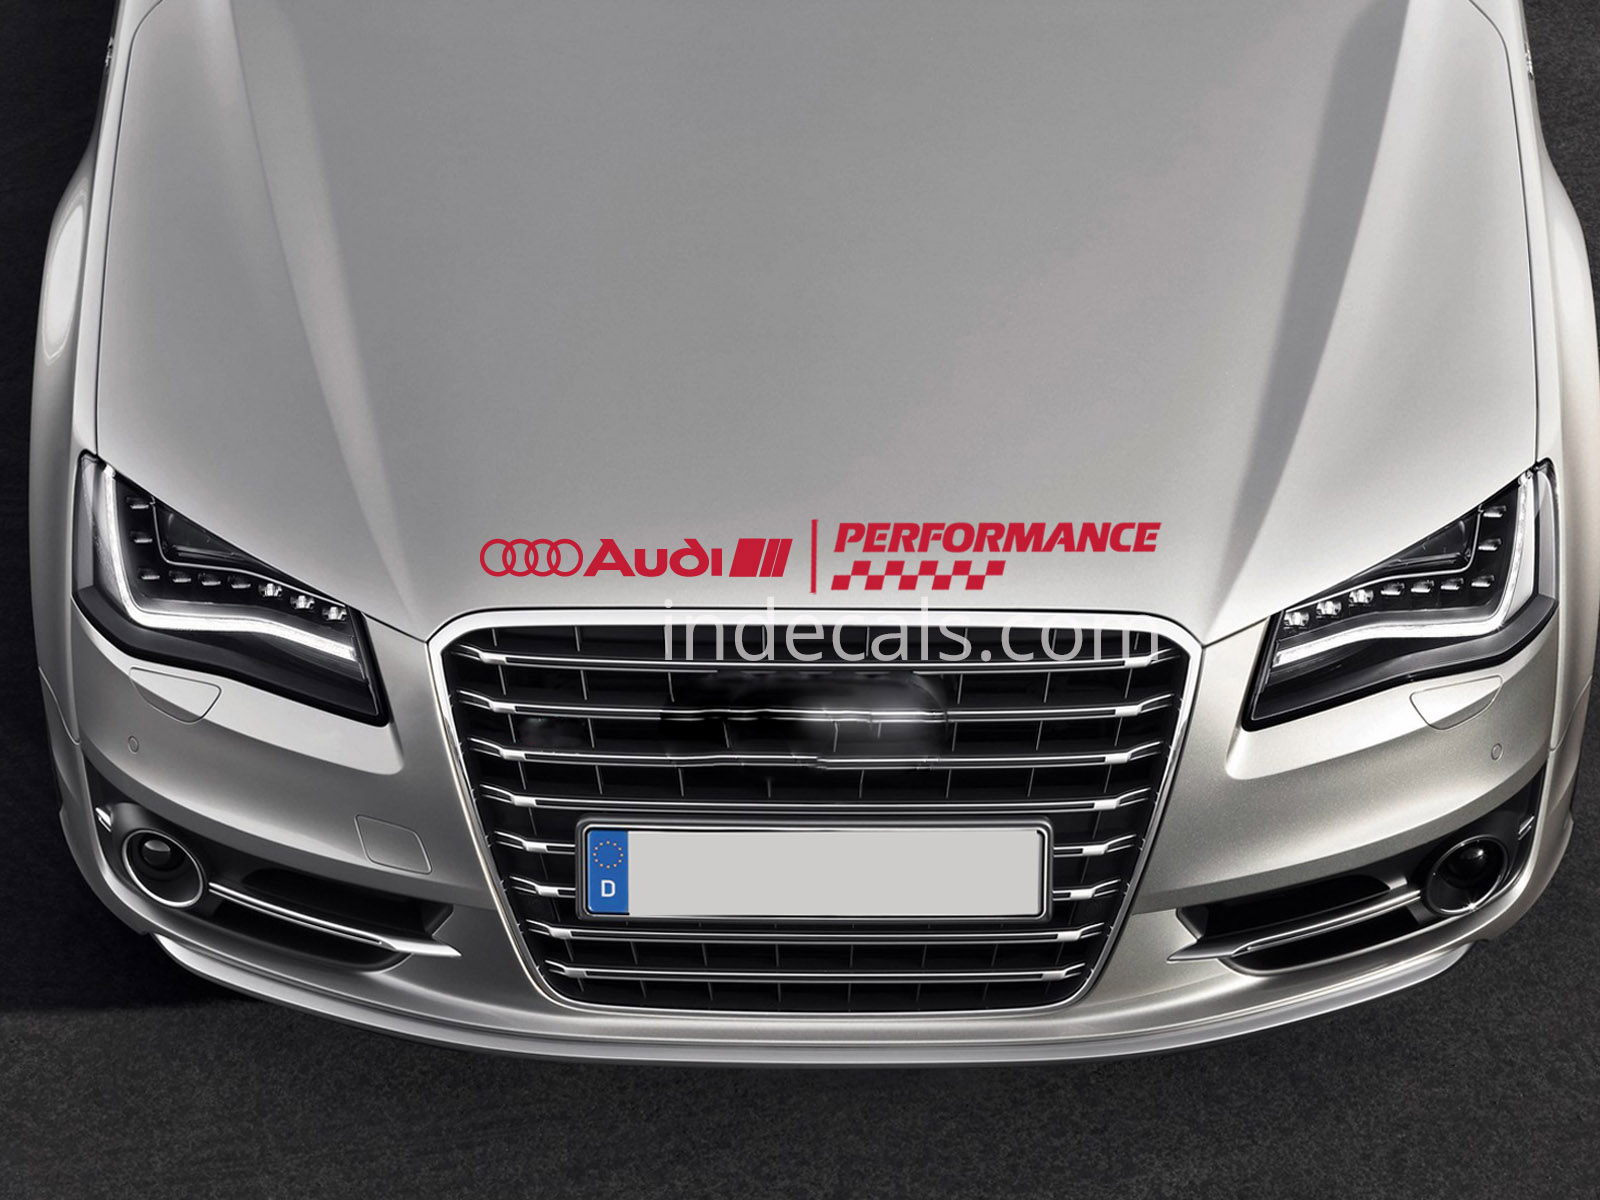 1 x Audi Performance Sticker for Bonnet - Red